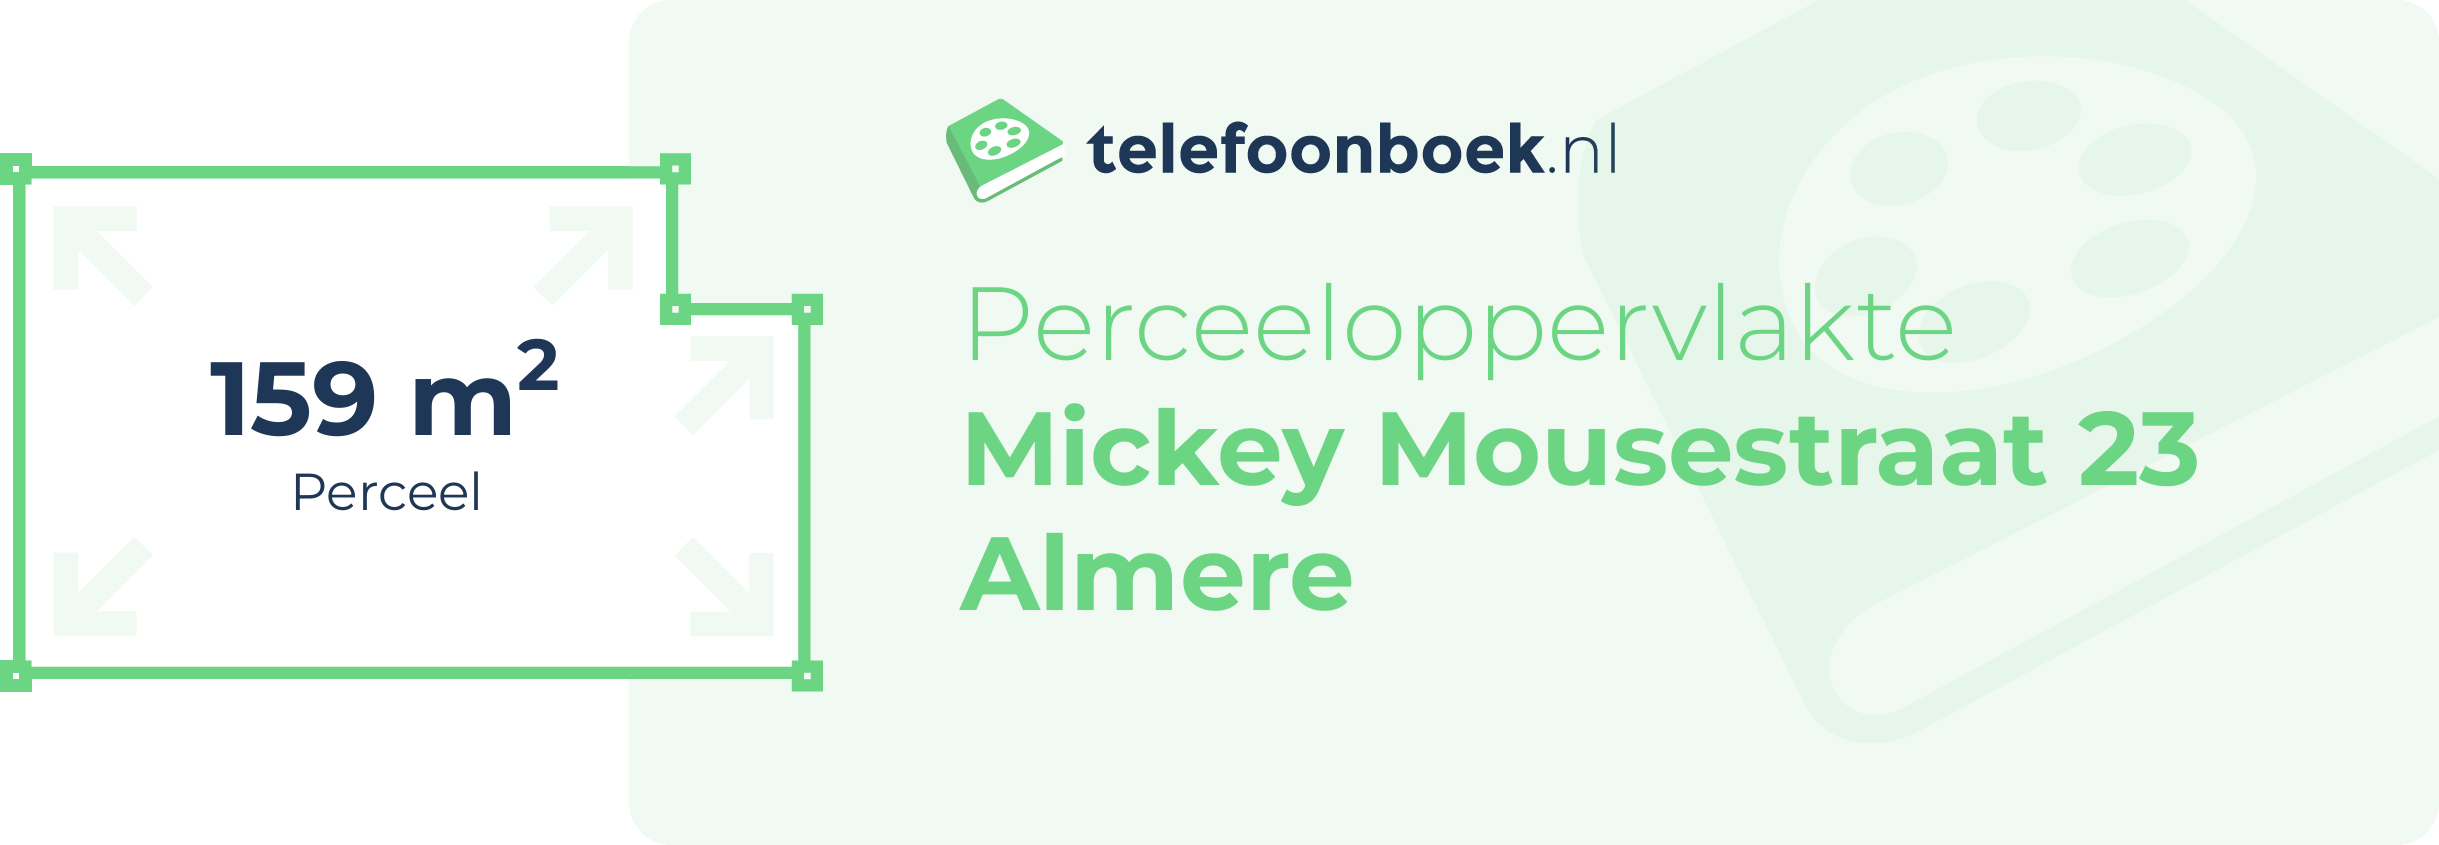 Perceeloppervlakte Mickey Mousestraat 23 Almere